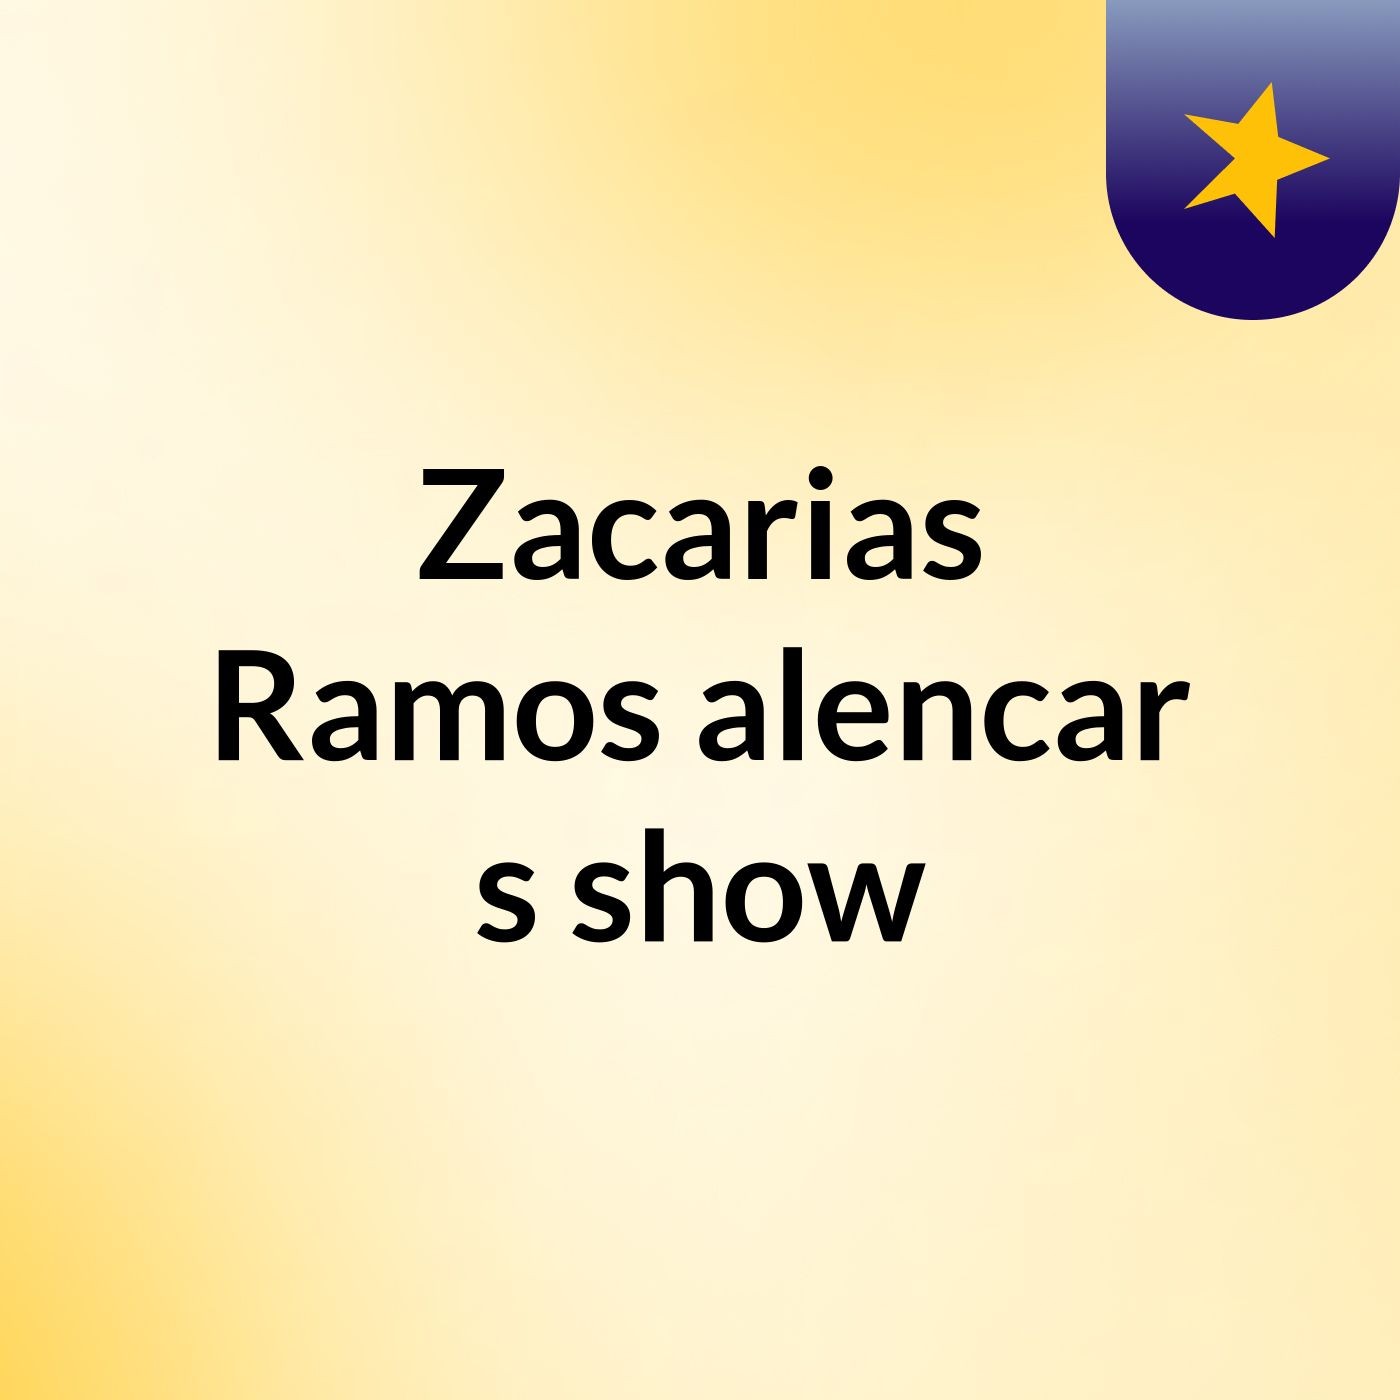 Zacarias Ramos alencar's show